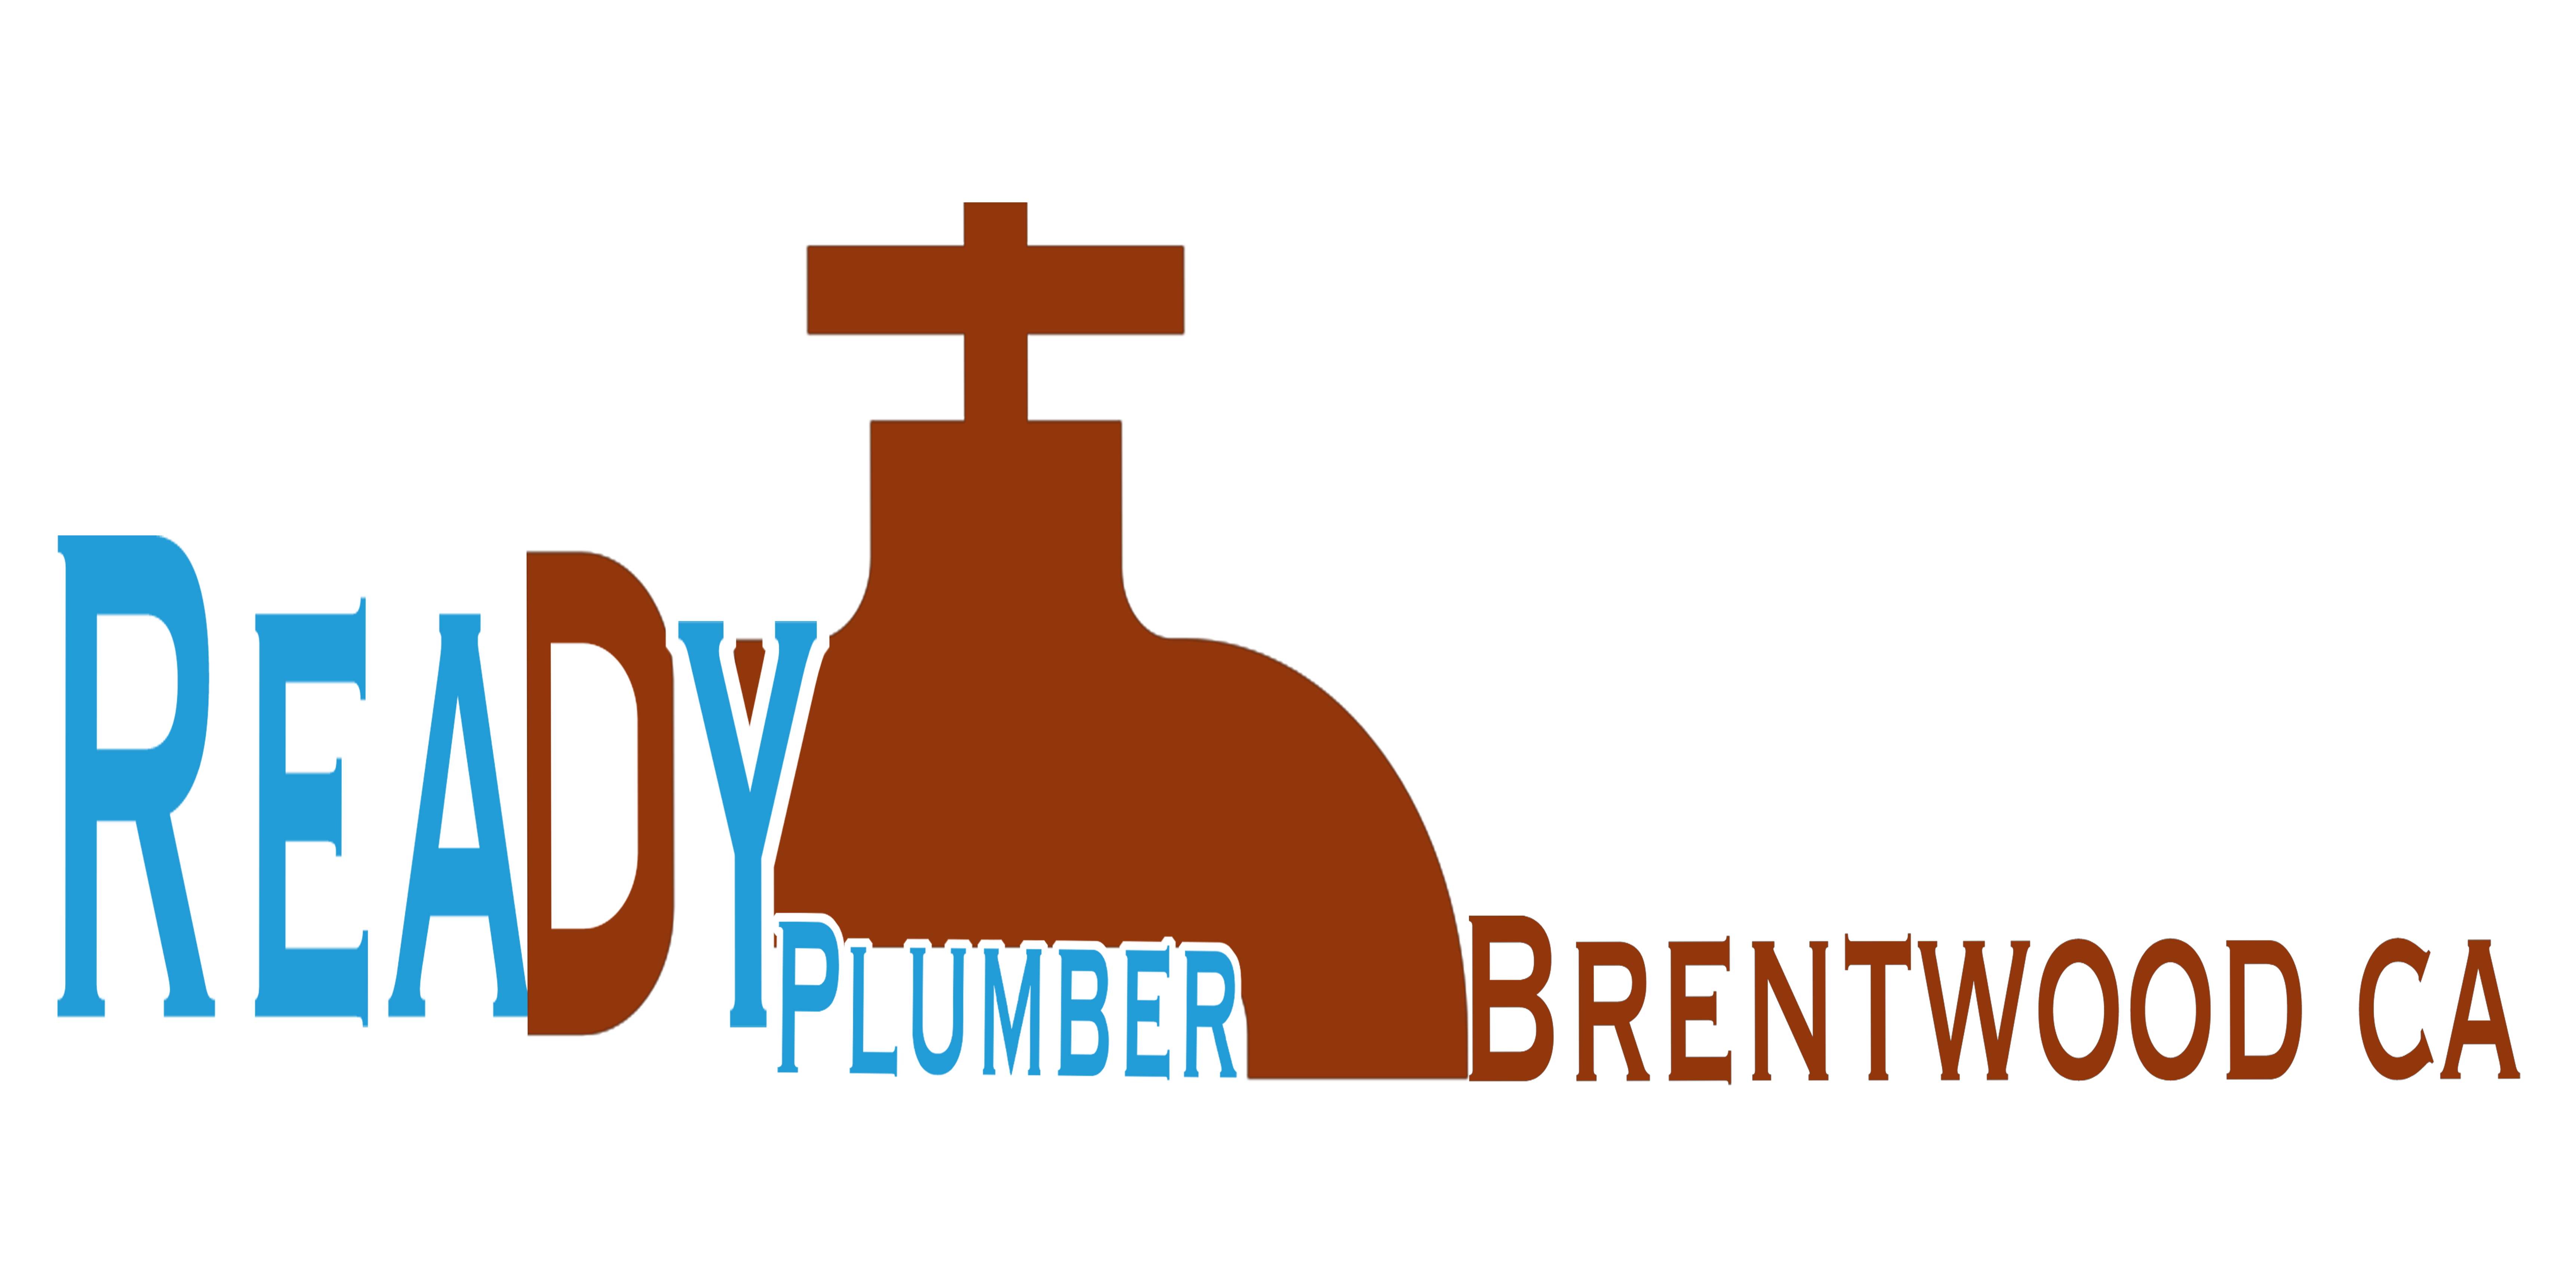 ready plumber brentwood ca logo